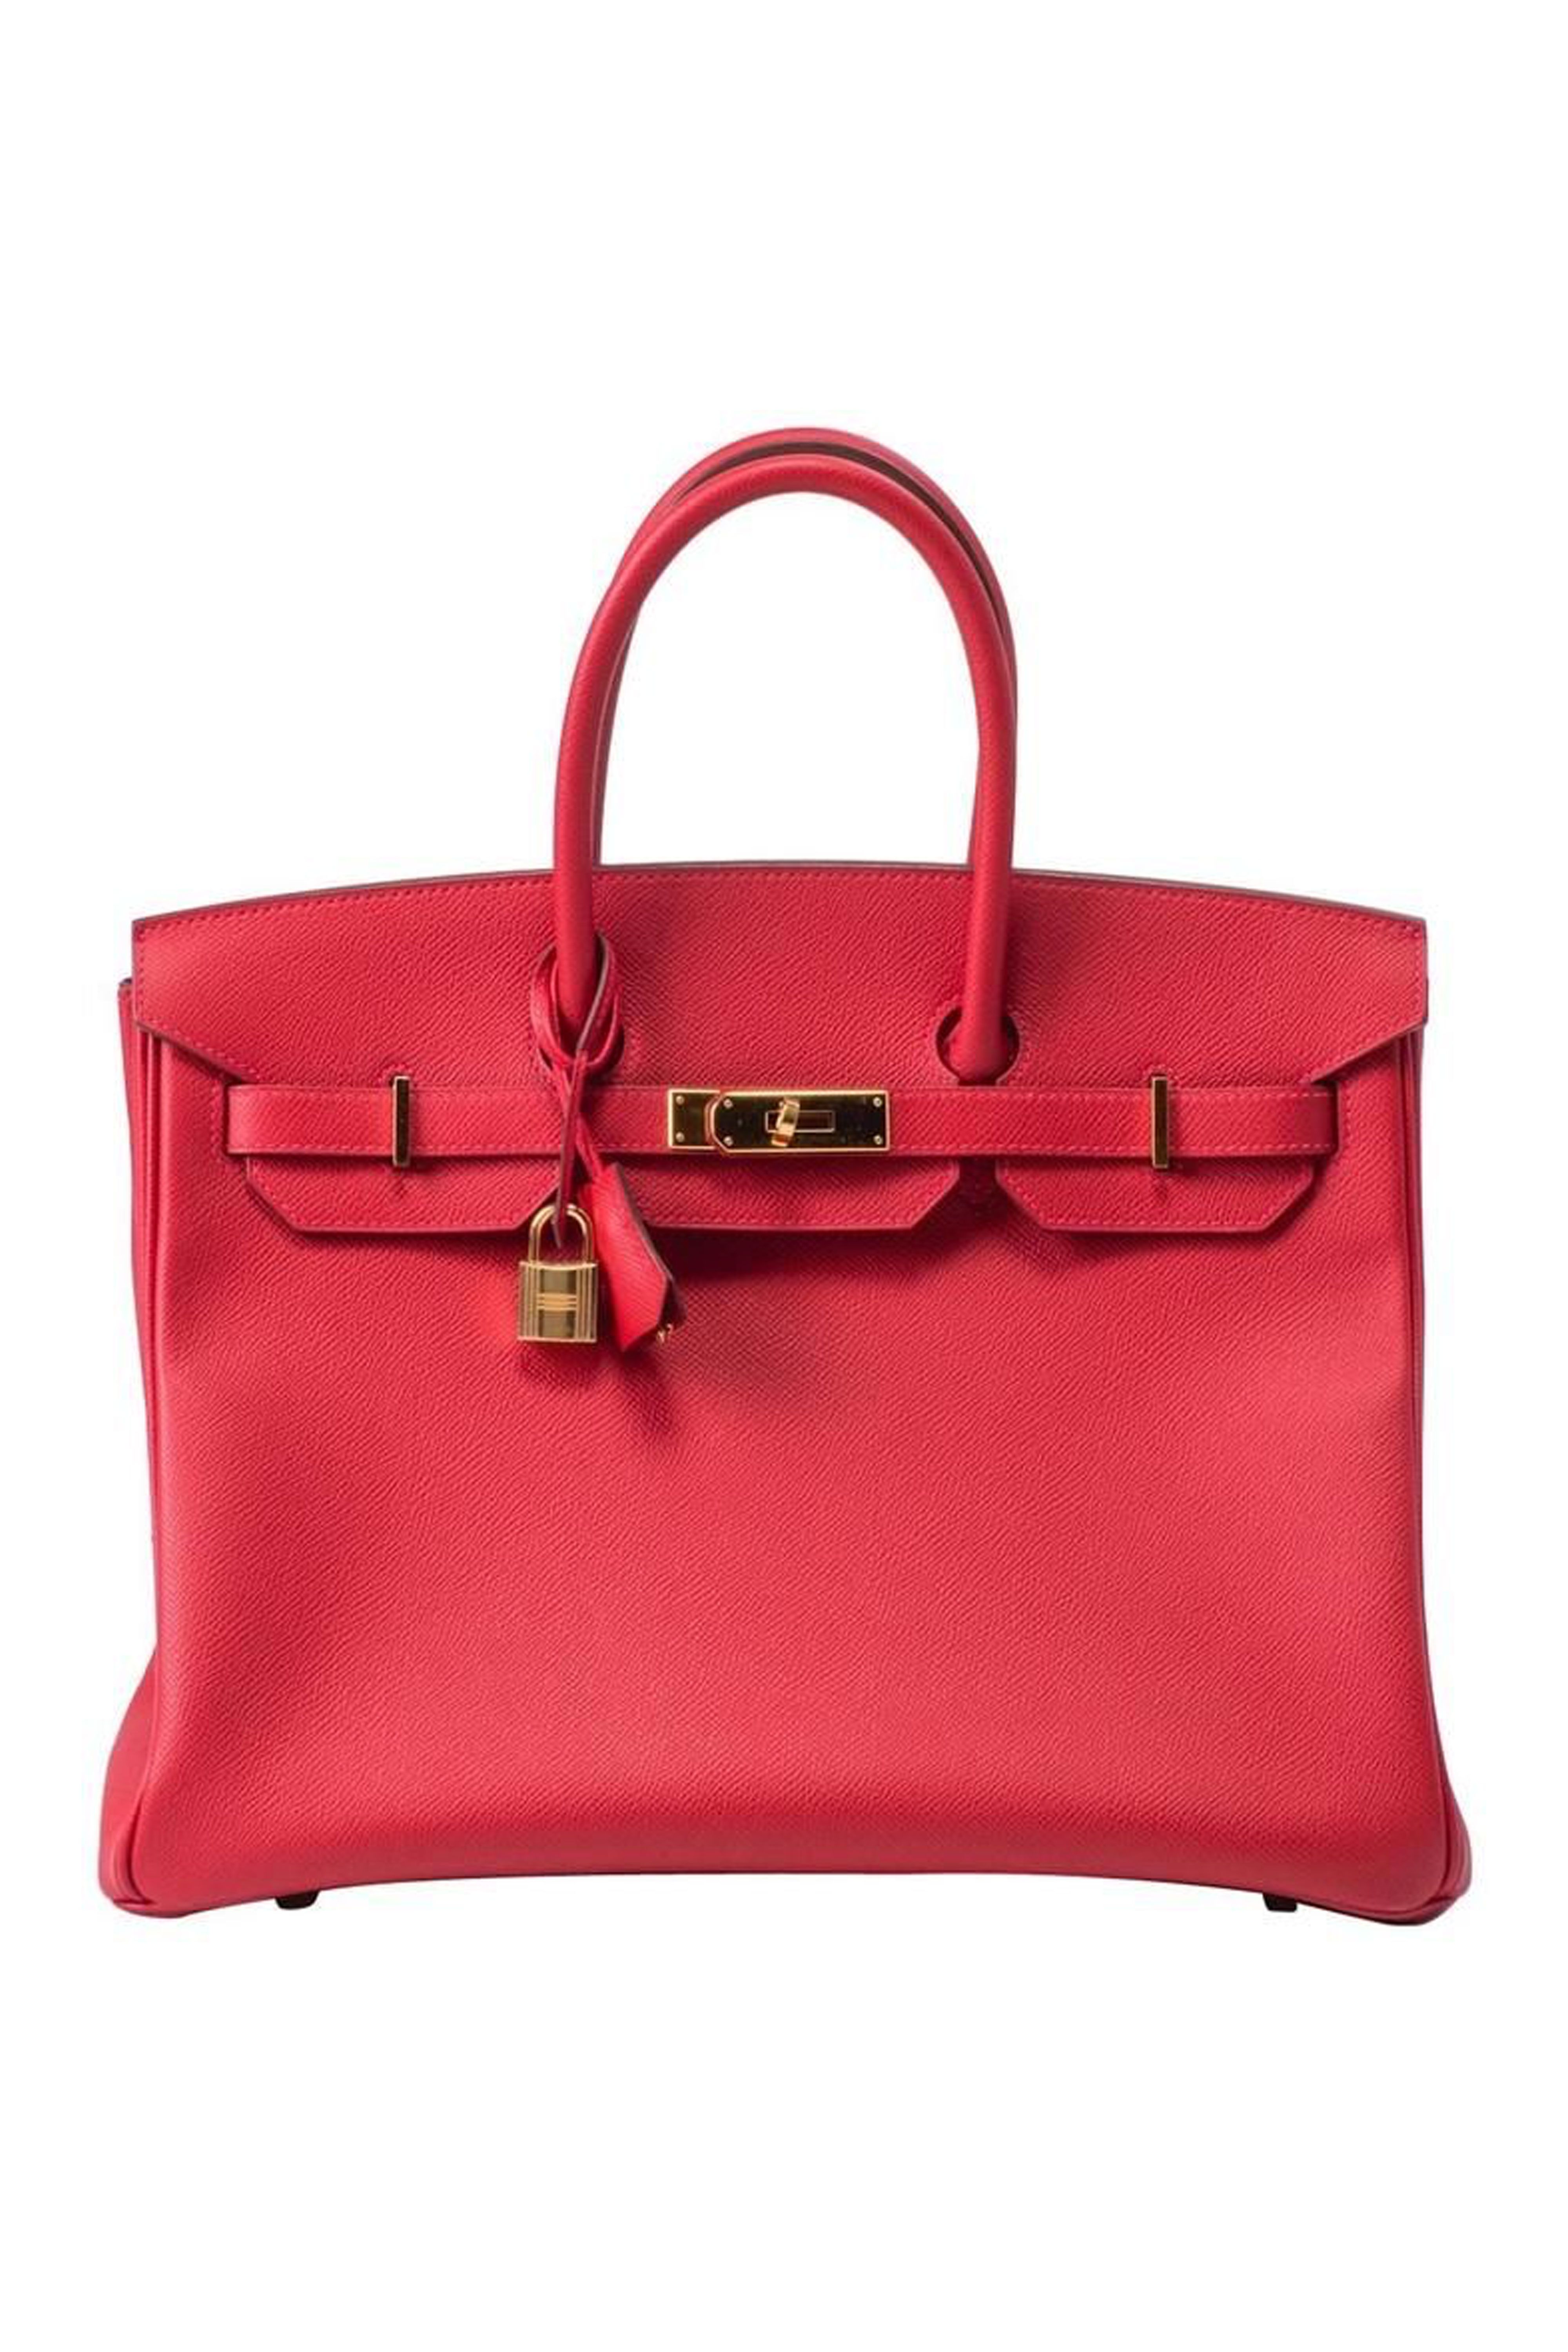 Wardrobe Essentials: 5 Types of Designer Bags Every Woman Needs